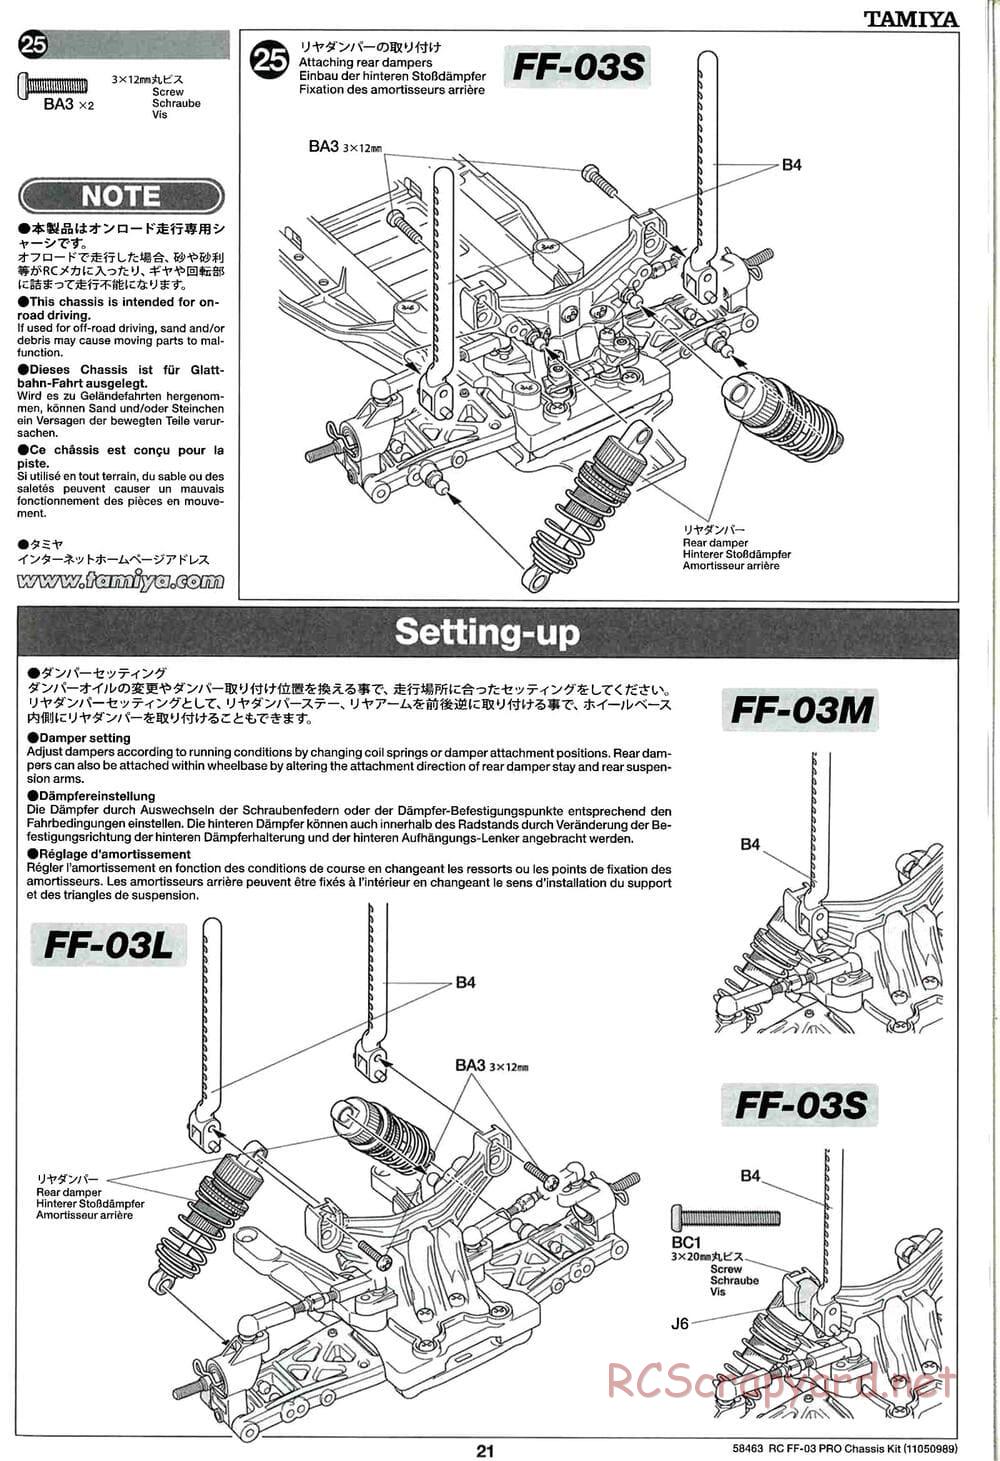 Tamiya - FF-03 Pro Chassis - Manual - Page 21